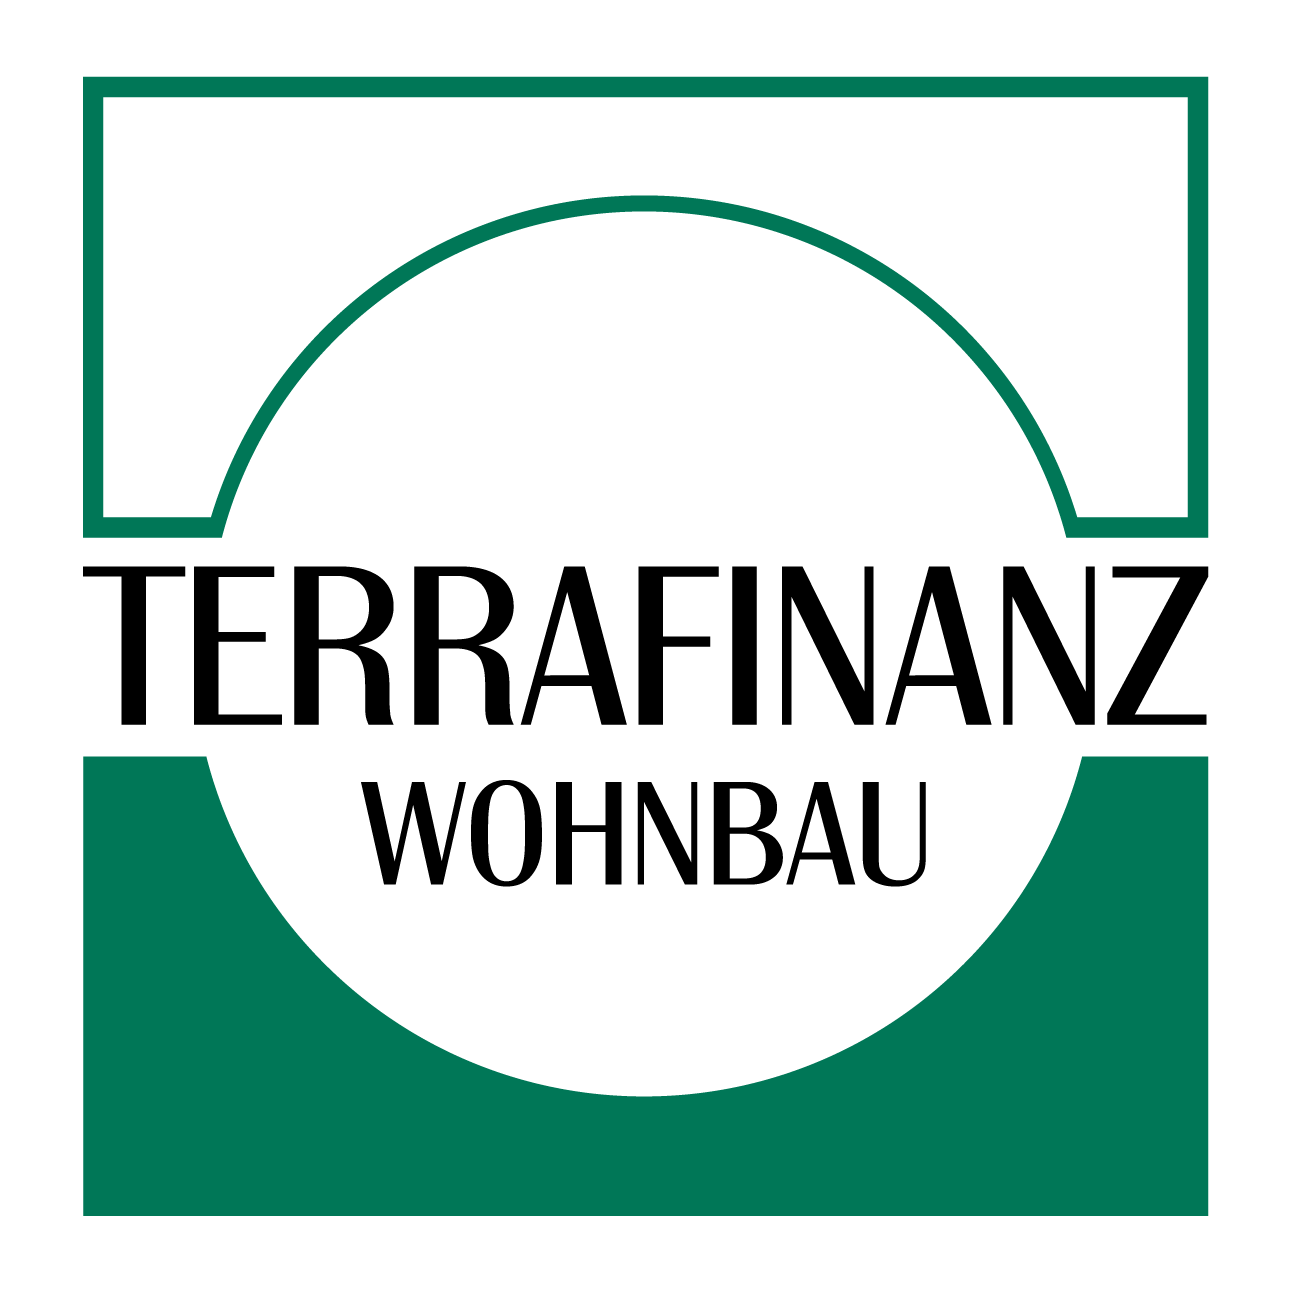 Terrafinanz GmbH & Co. KG